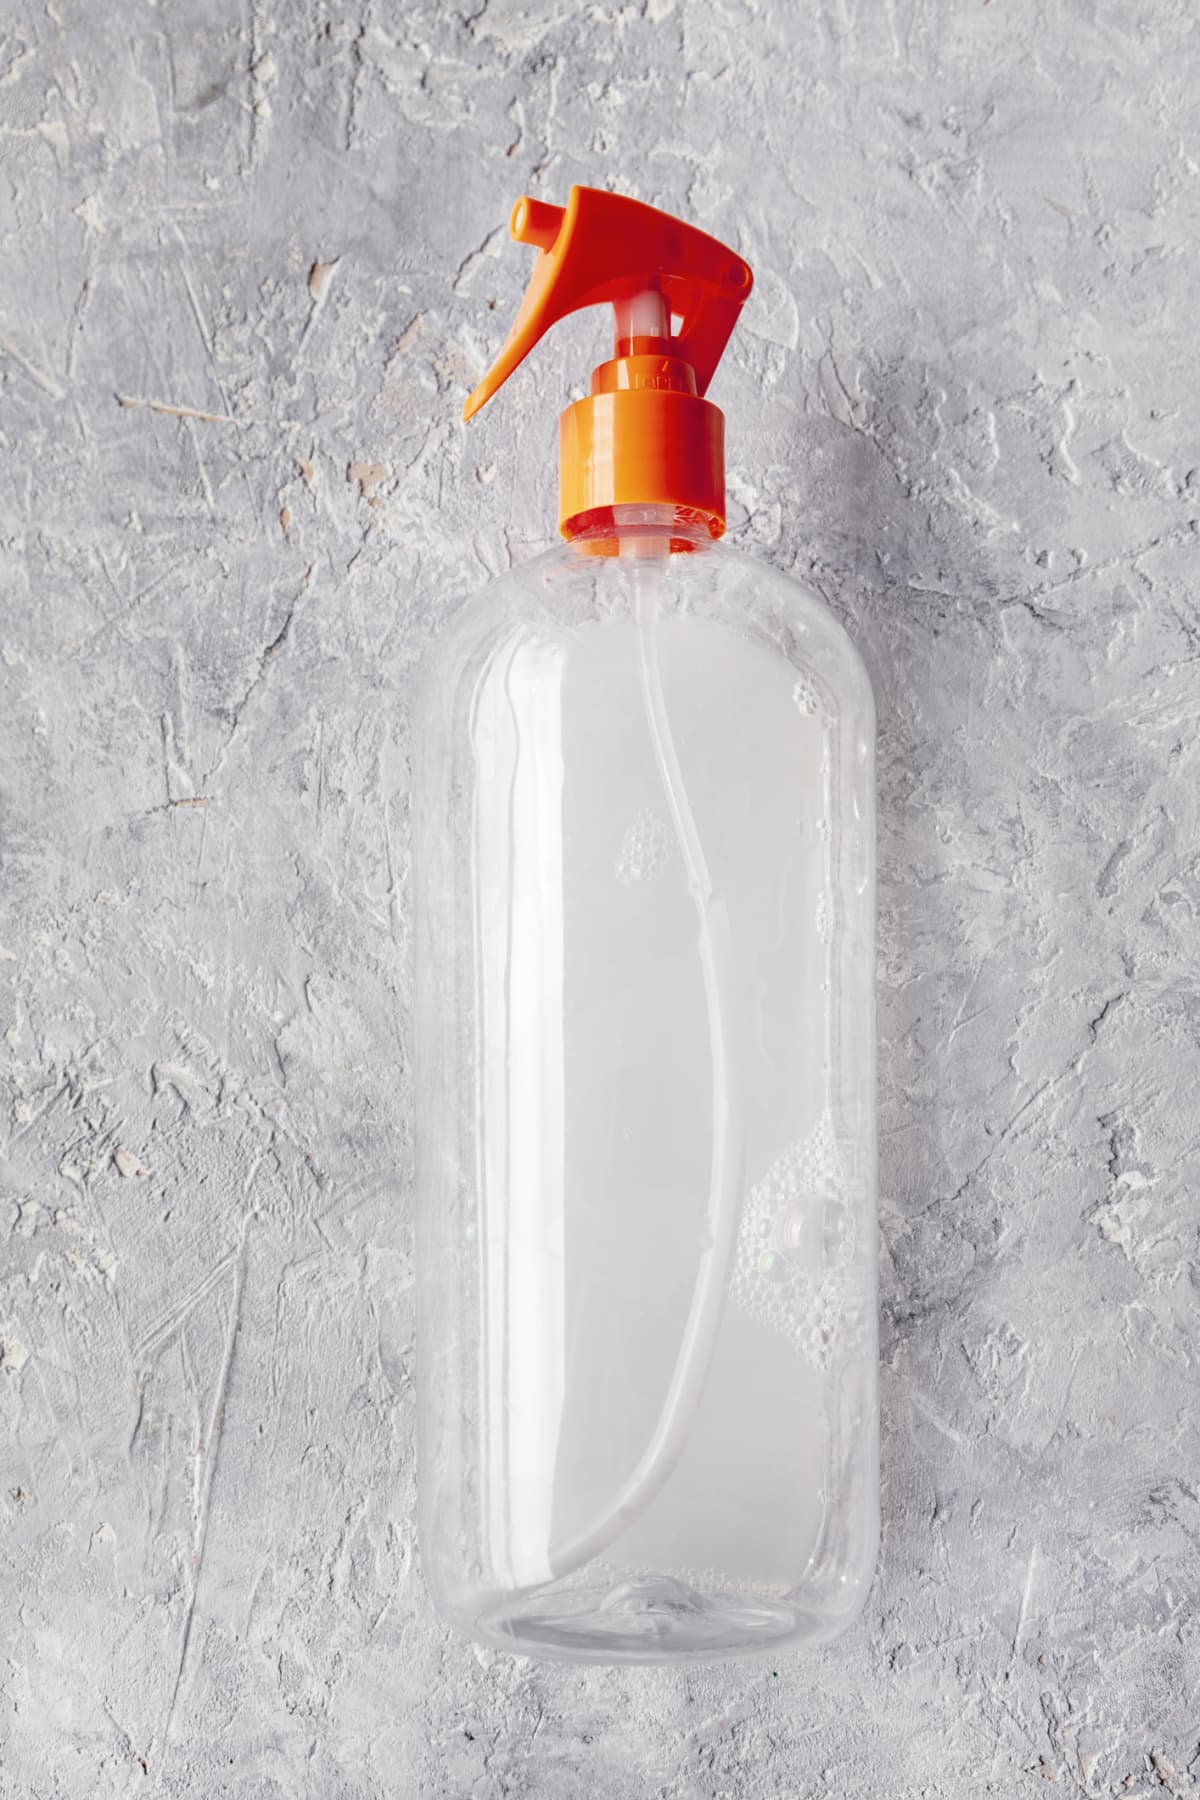 Spray bottle on concrete surface